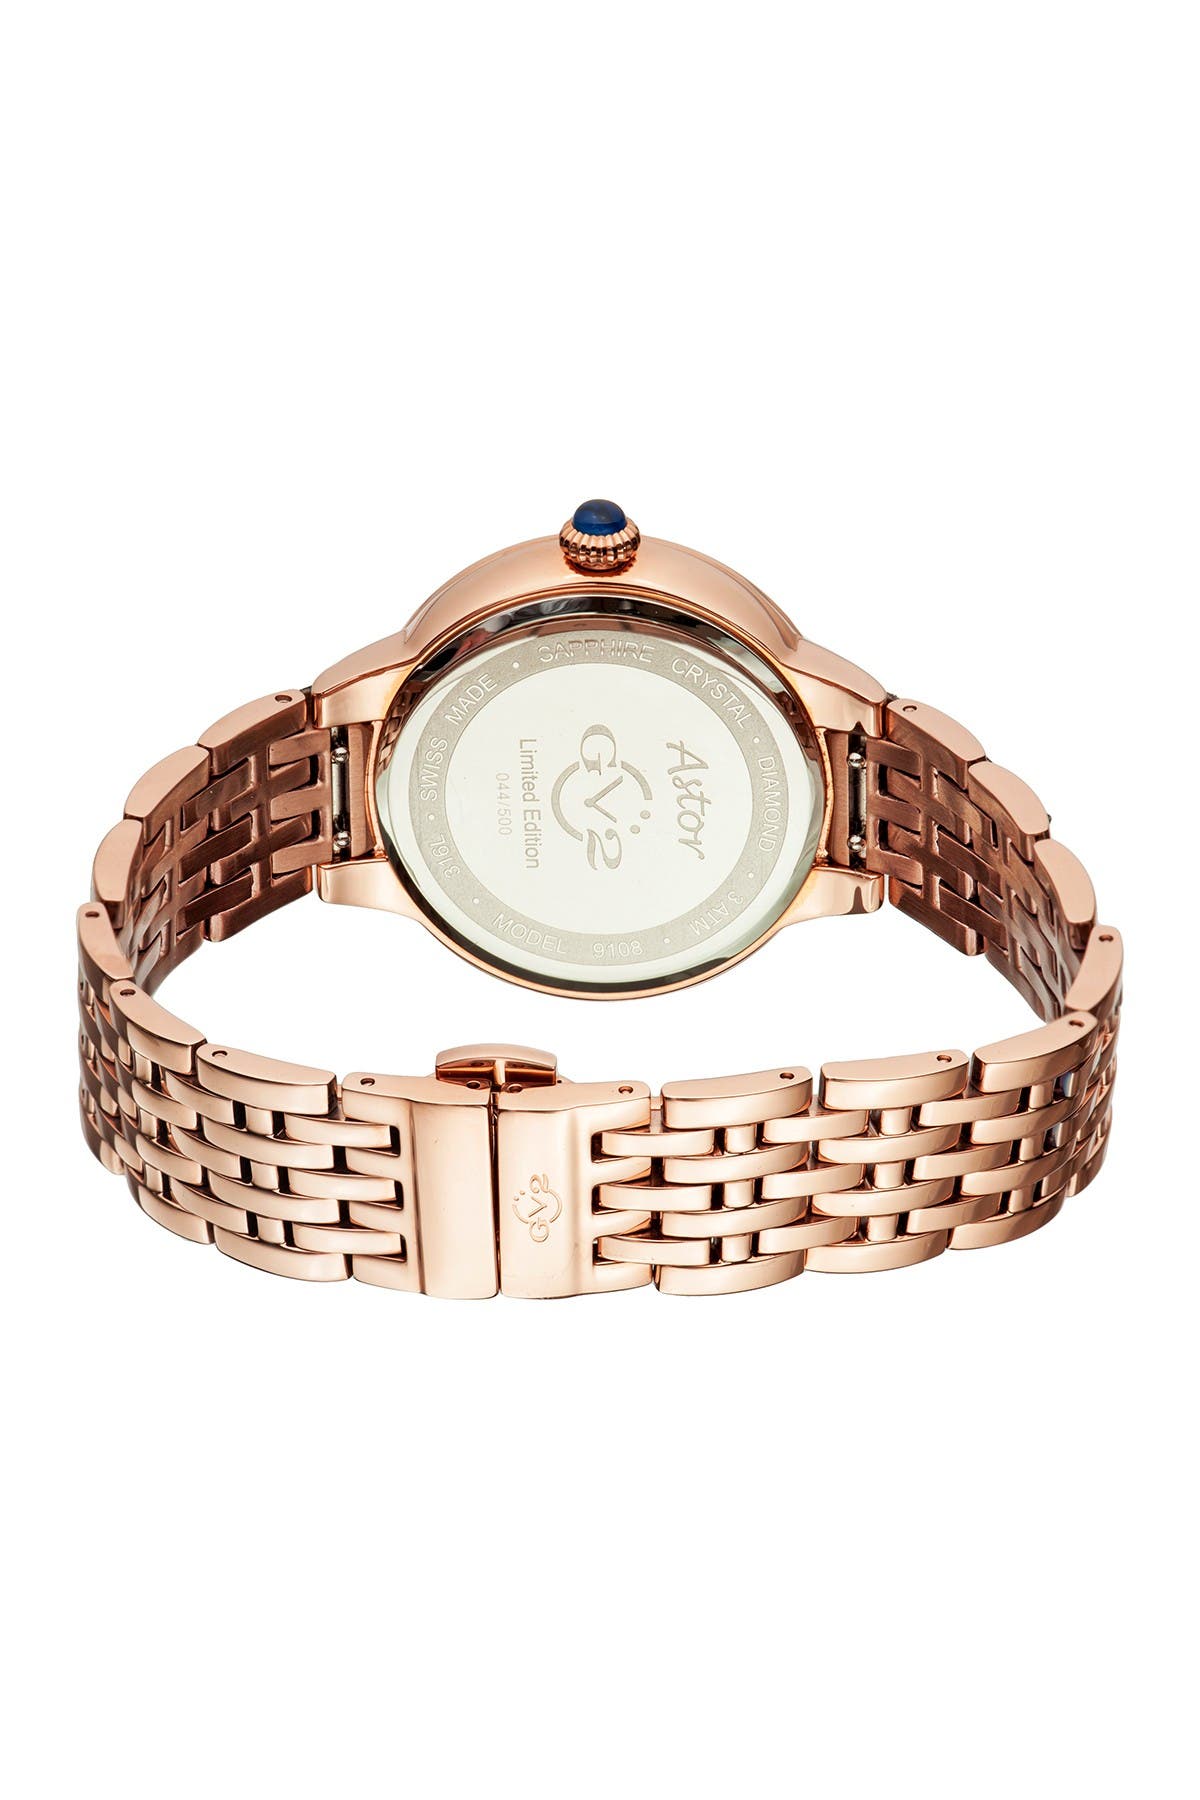 Gevril | Women's Astor Diamond Quartz Watch, 40mm - 0.24 ctw ...